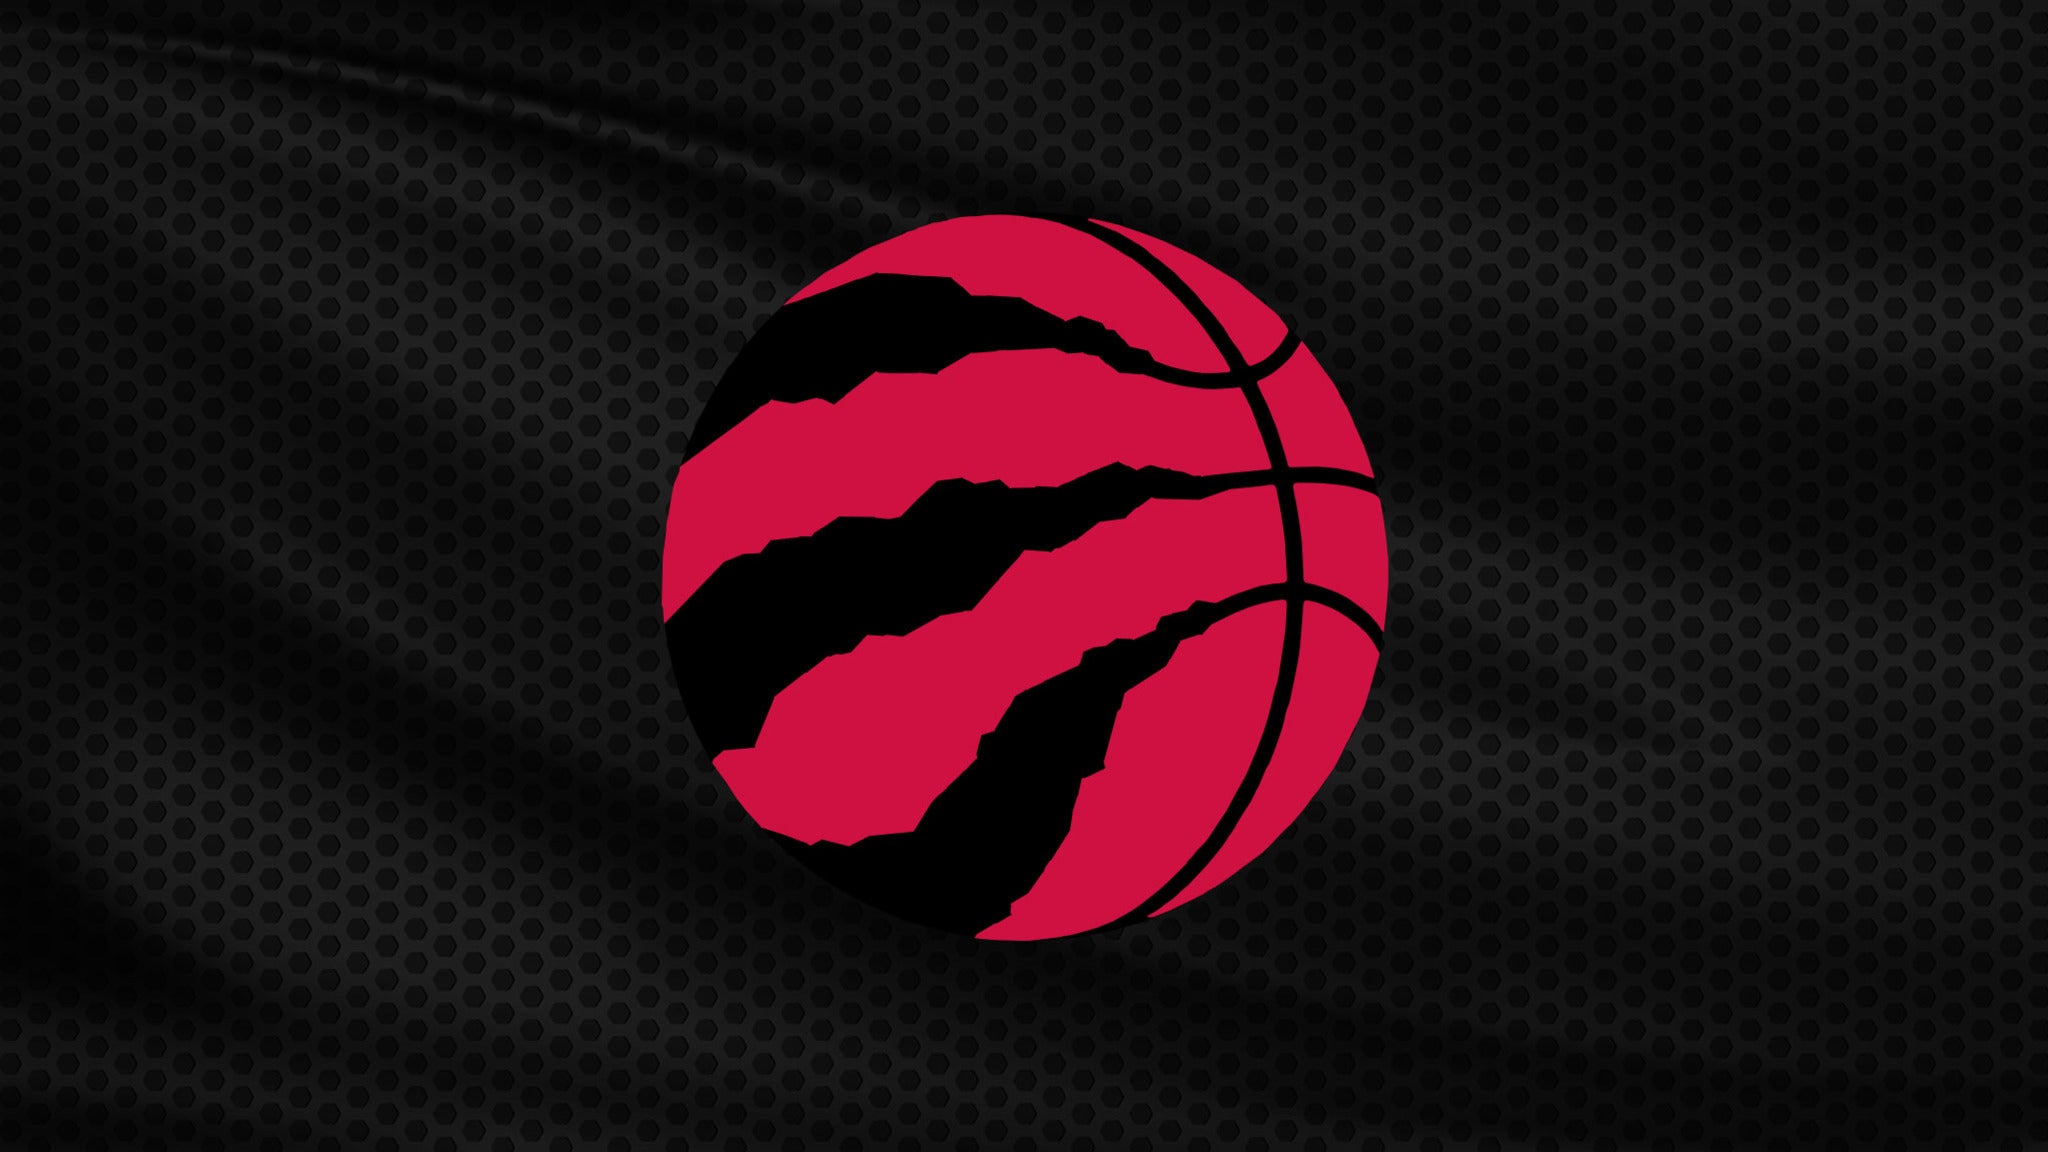 The Toronto Raptors' Takeaways from the 2023 NBA Summer League